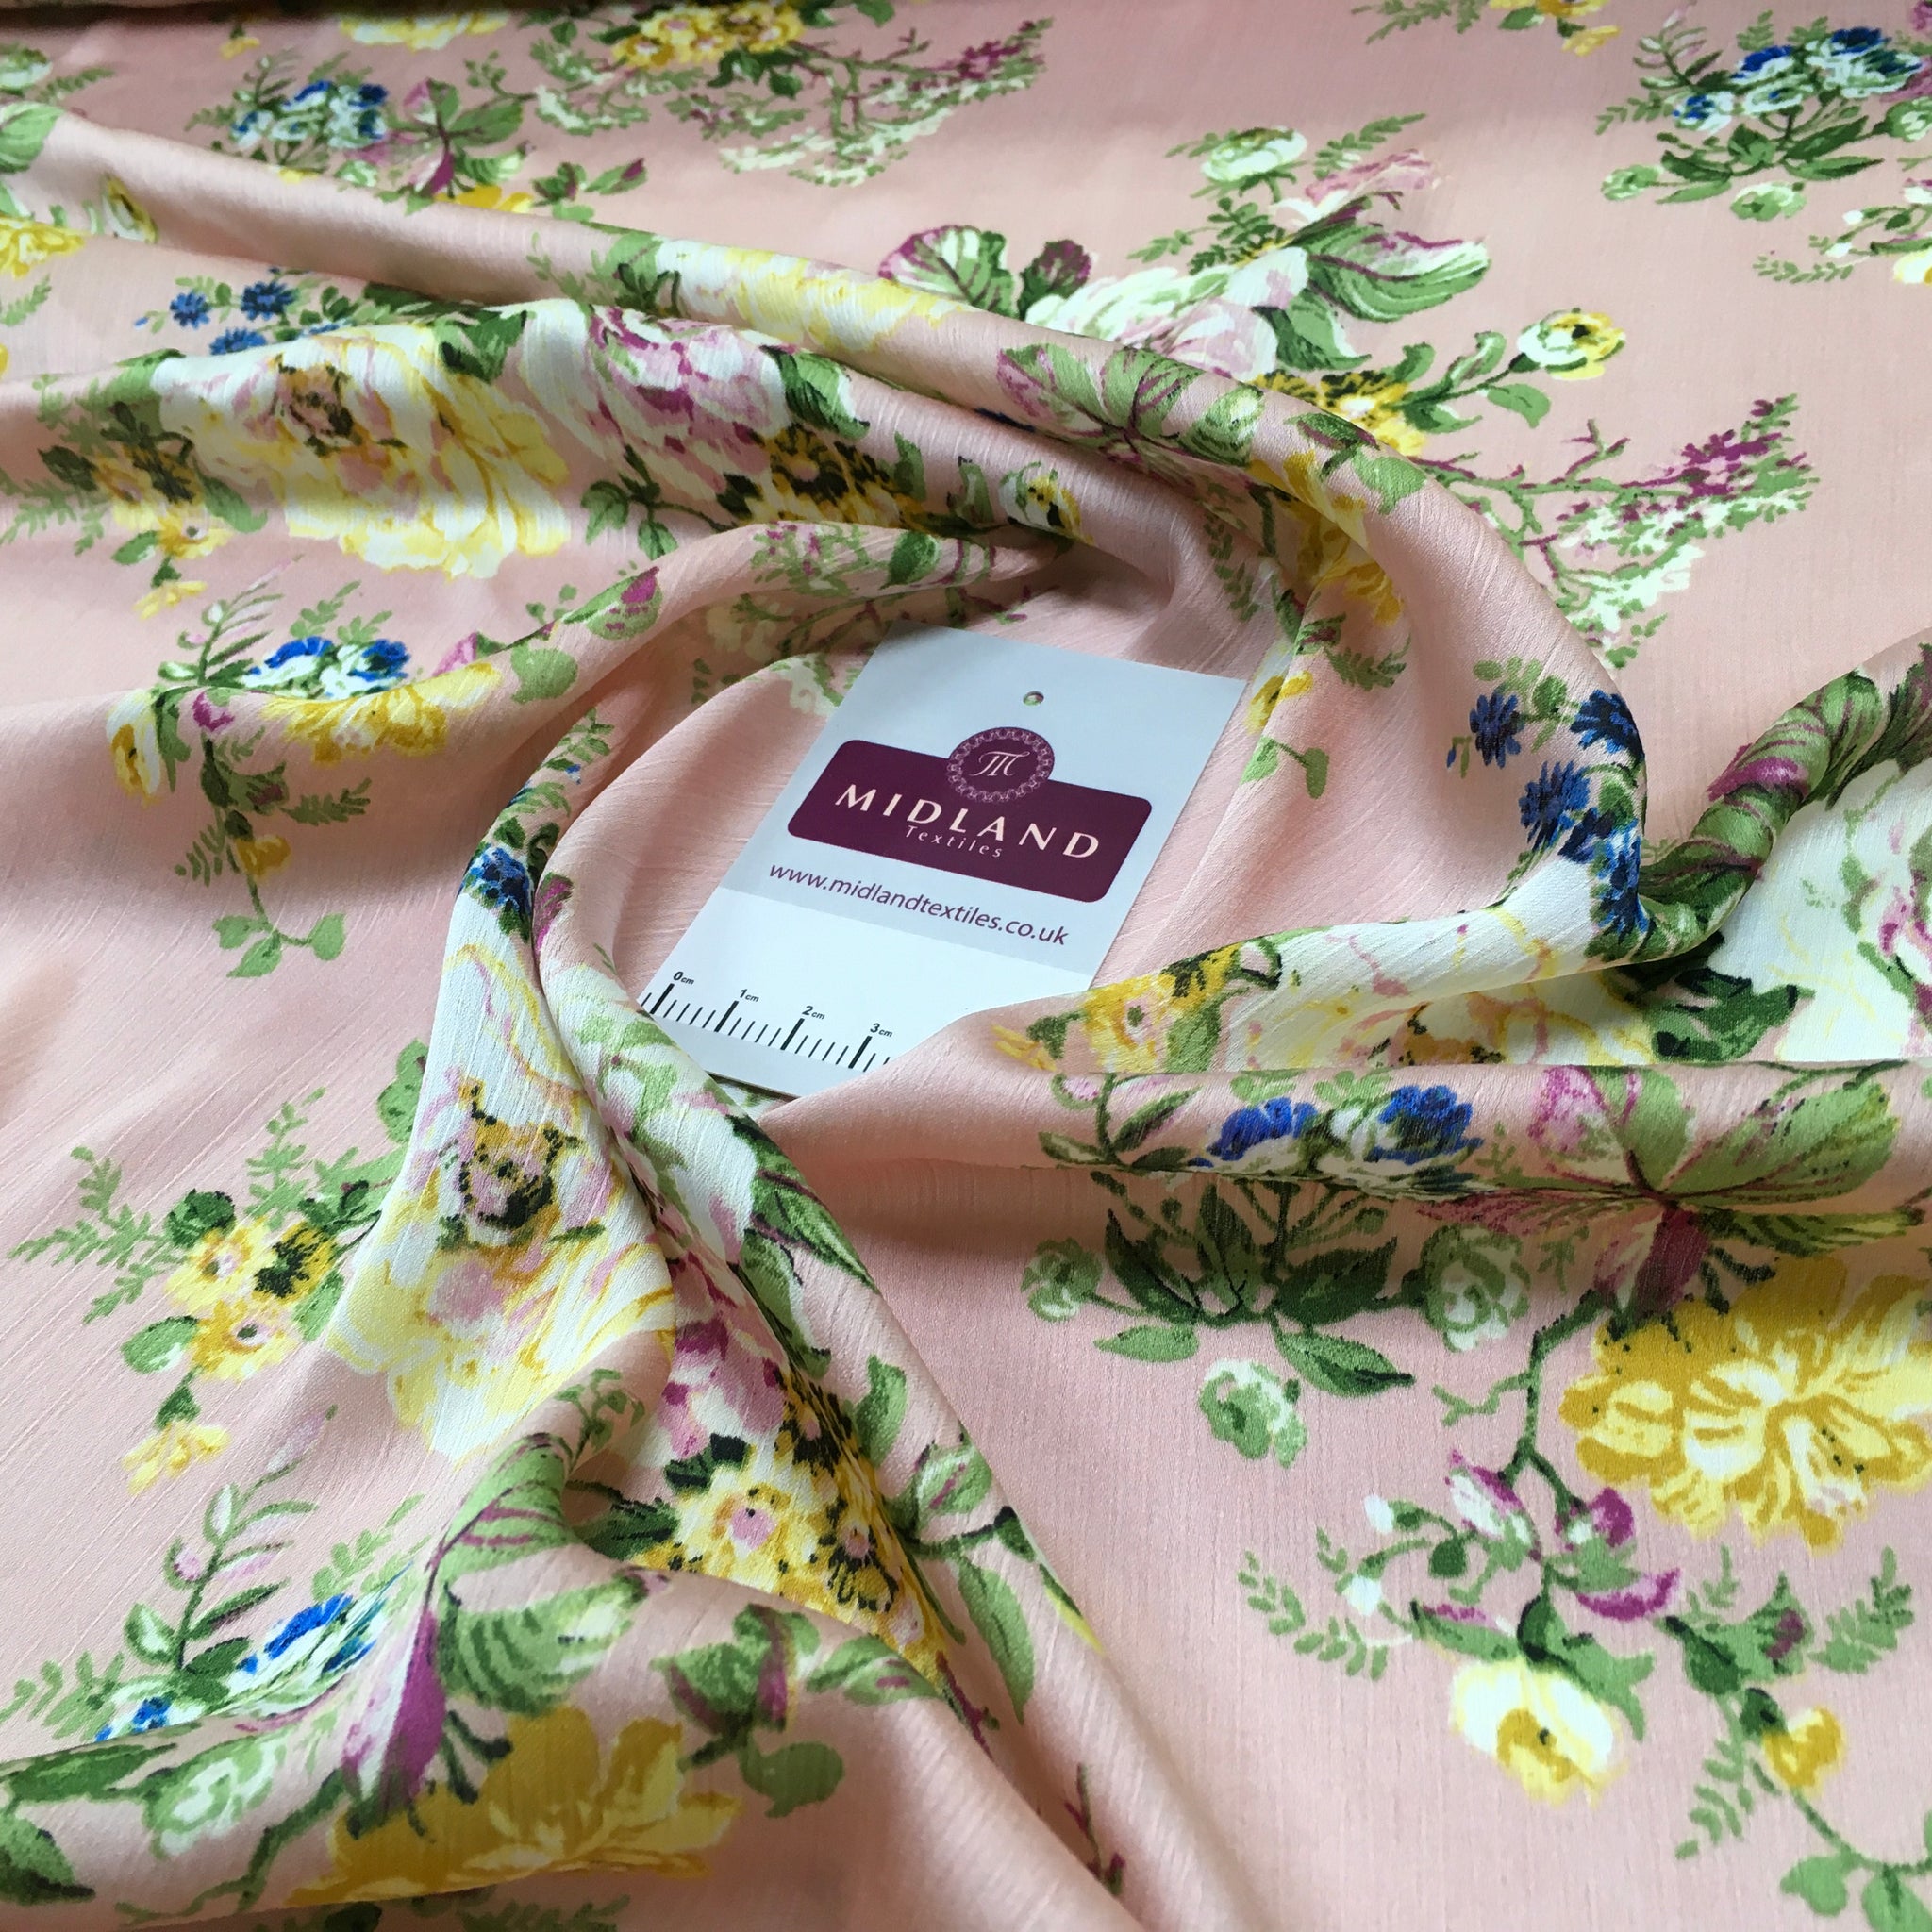 Floral Roses Crinkle Satin Chiffon Dress Fabric M1492 Mtex